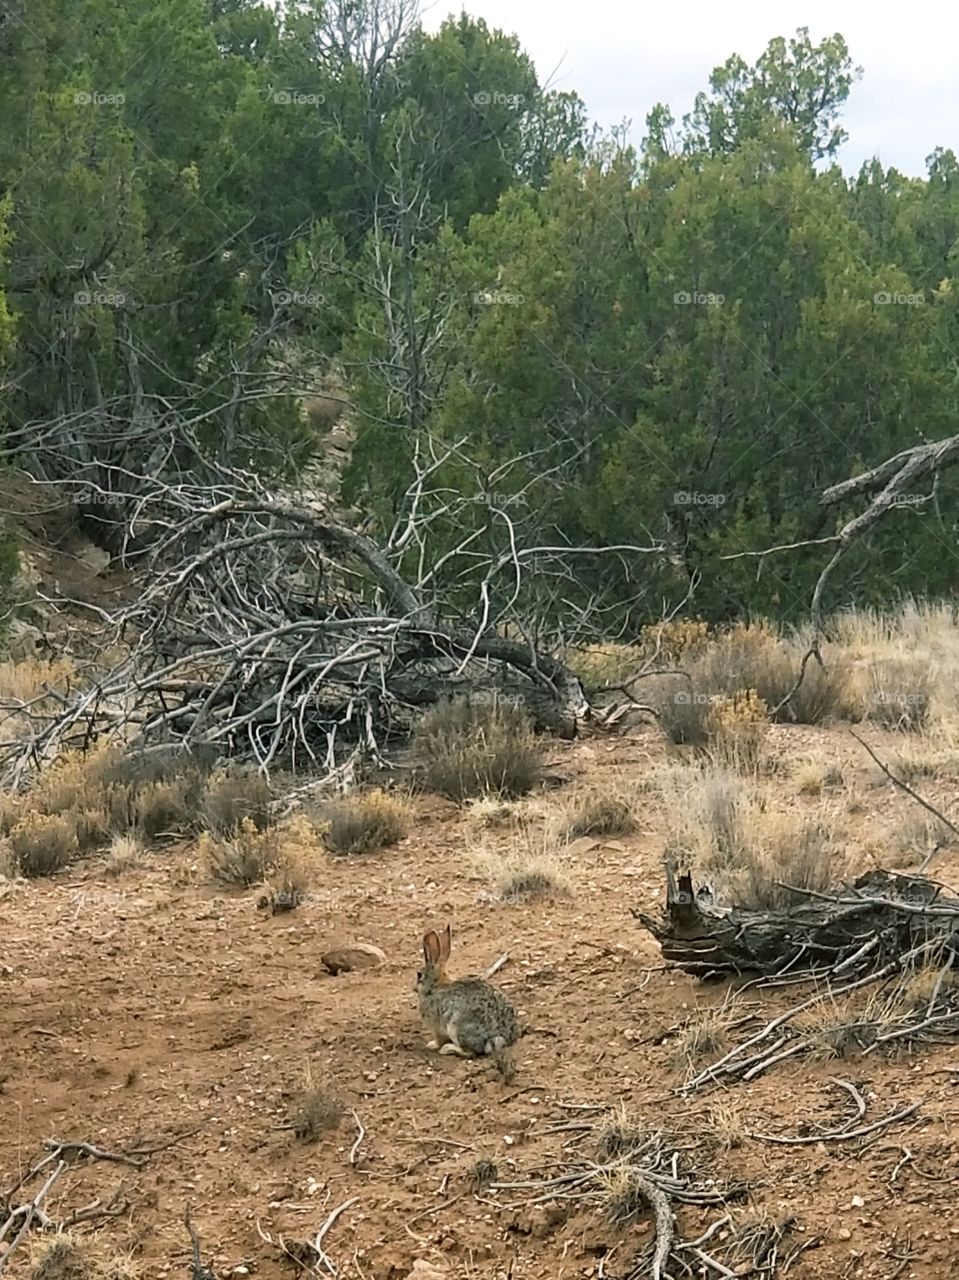 NM desert rabbit wide view